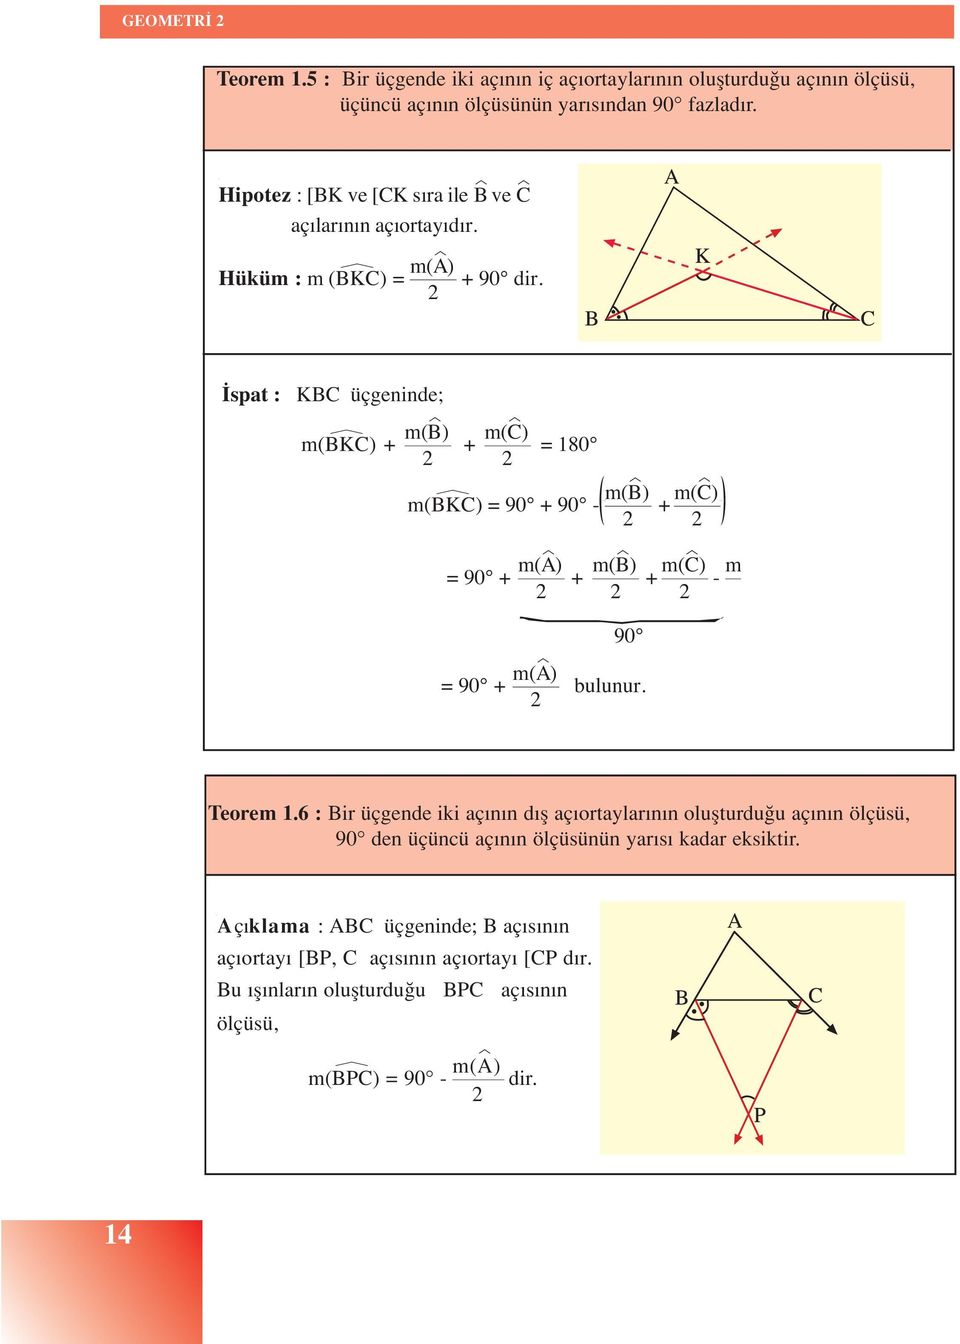 İspat : KBC üçgeninde; m(bkc) + m(b) + m(c) = 180 m(bkc) = 90 + 90 - m(b) + m(c) = 90 + m(a) + m(b) + m(c) - m 90 = 90 + m(a) bulunur. Teorem 1.